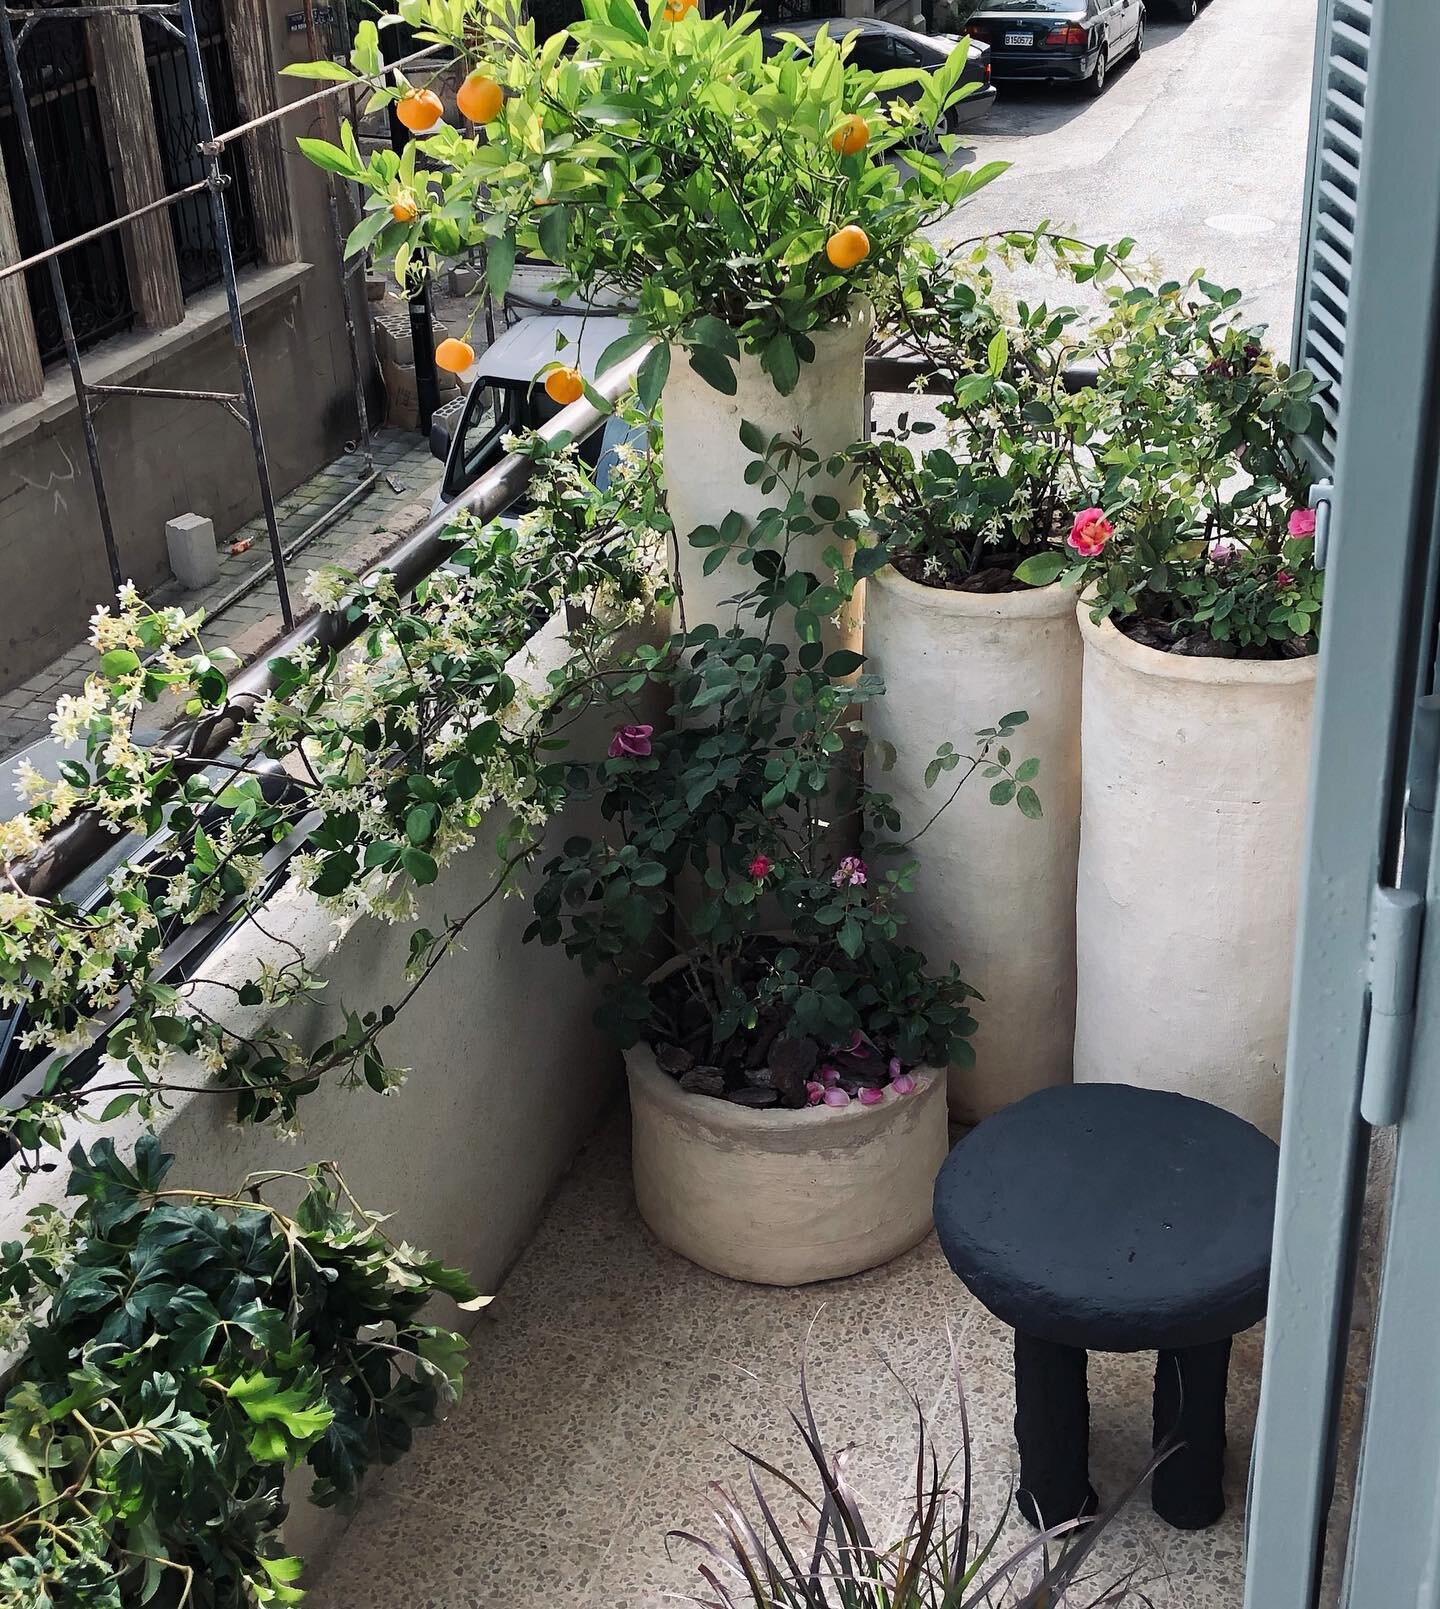 A mediterranean balcony in full bloom 🌿🌺💛

#plantscaping #balconygarden #balcony #plantlife #planter #planteriordesign #mediterranean